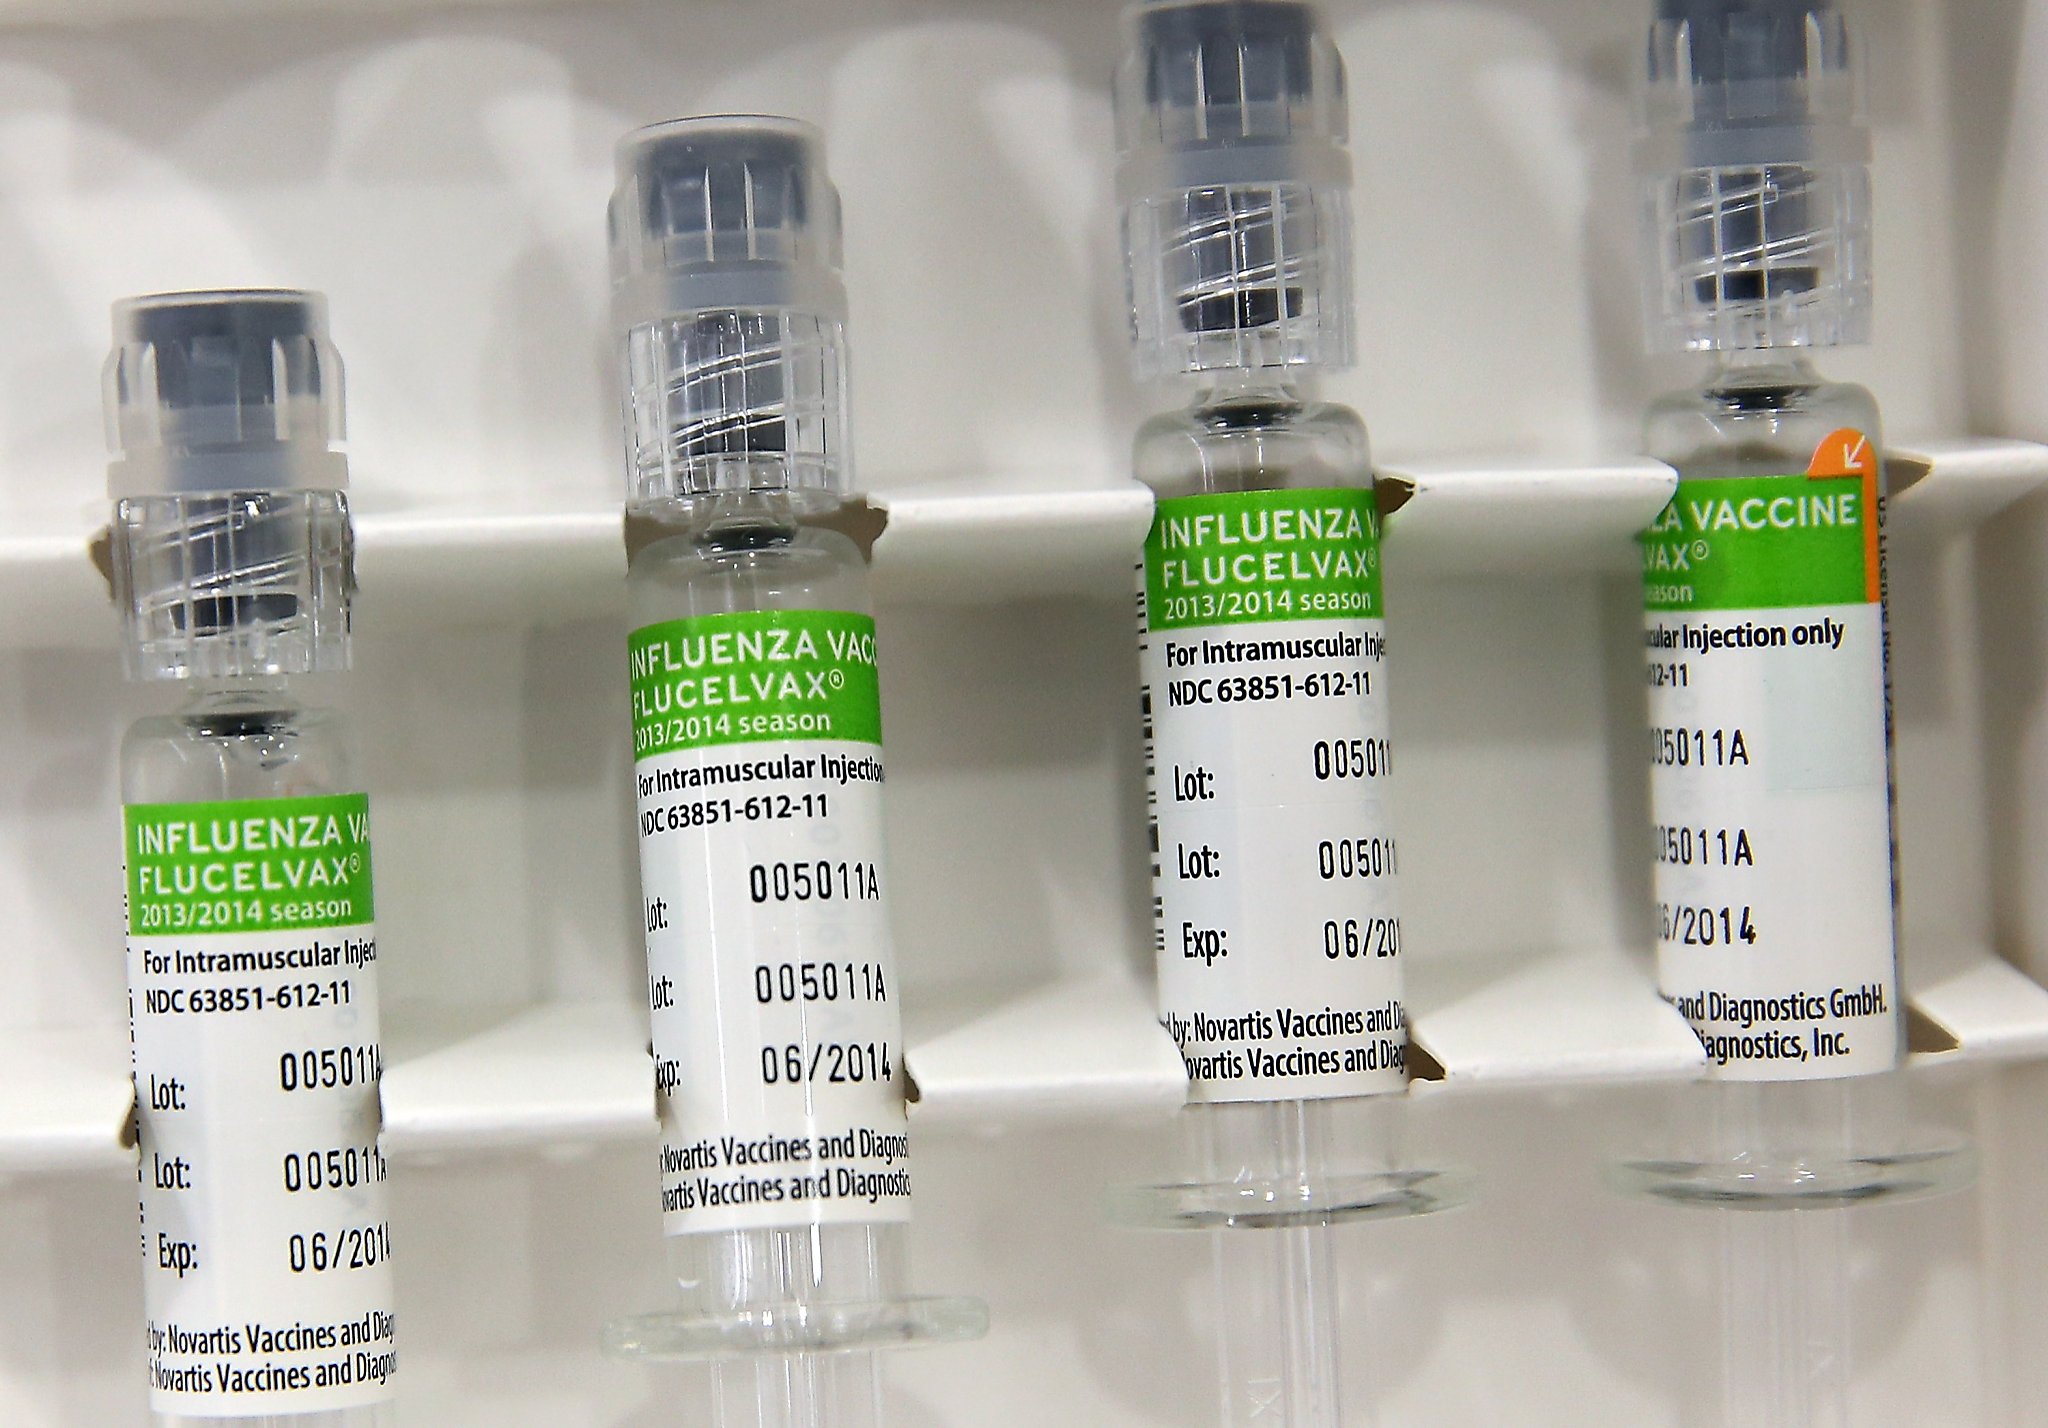 H1N1 flu strain has returned with a vengeance